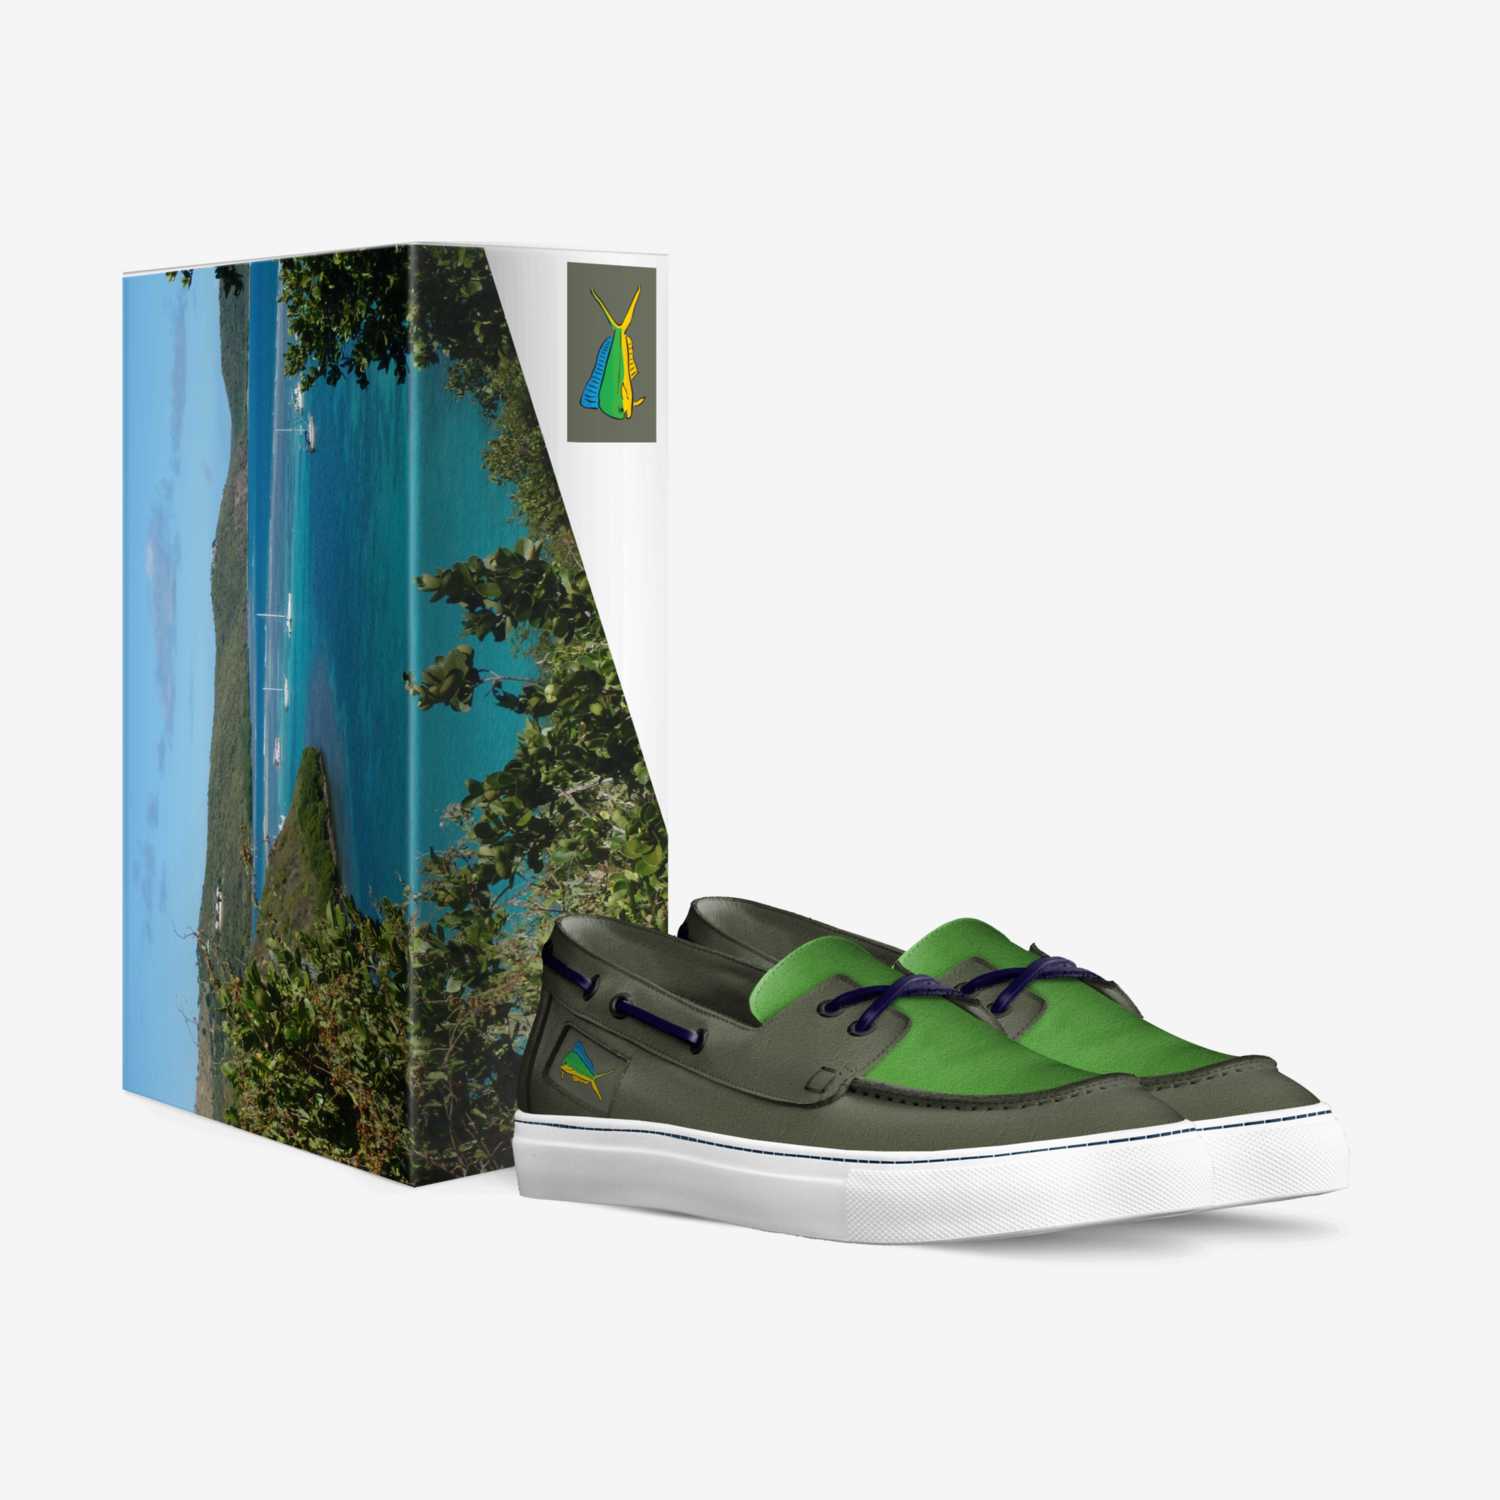 Dakity custom made in Italy shoes by Xavi Santoni | Box view